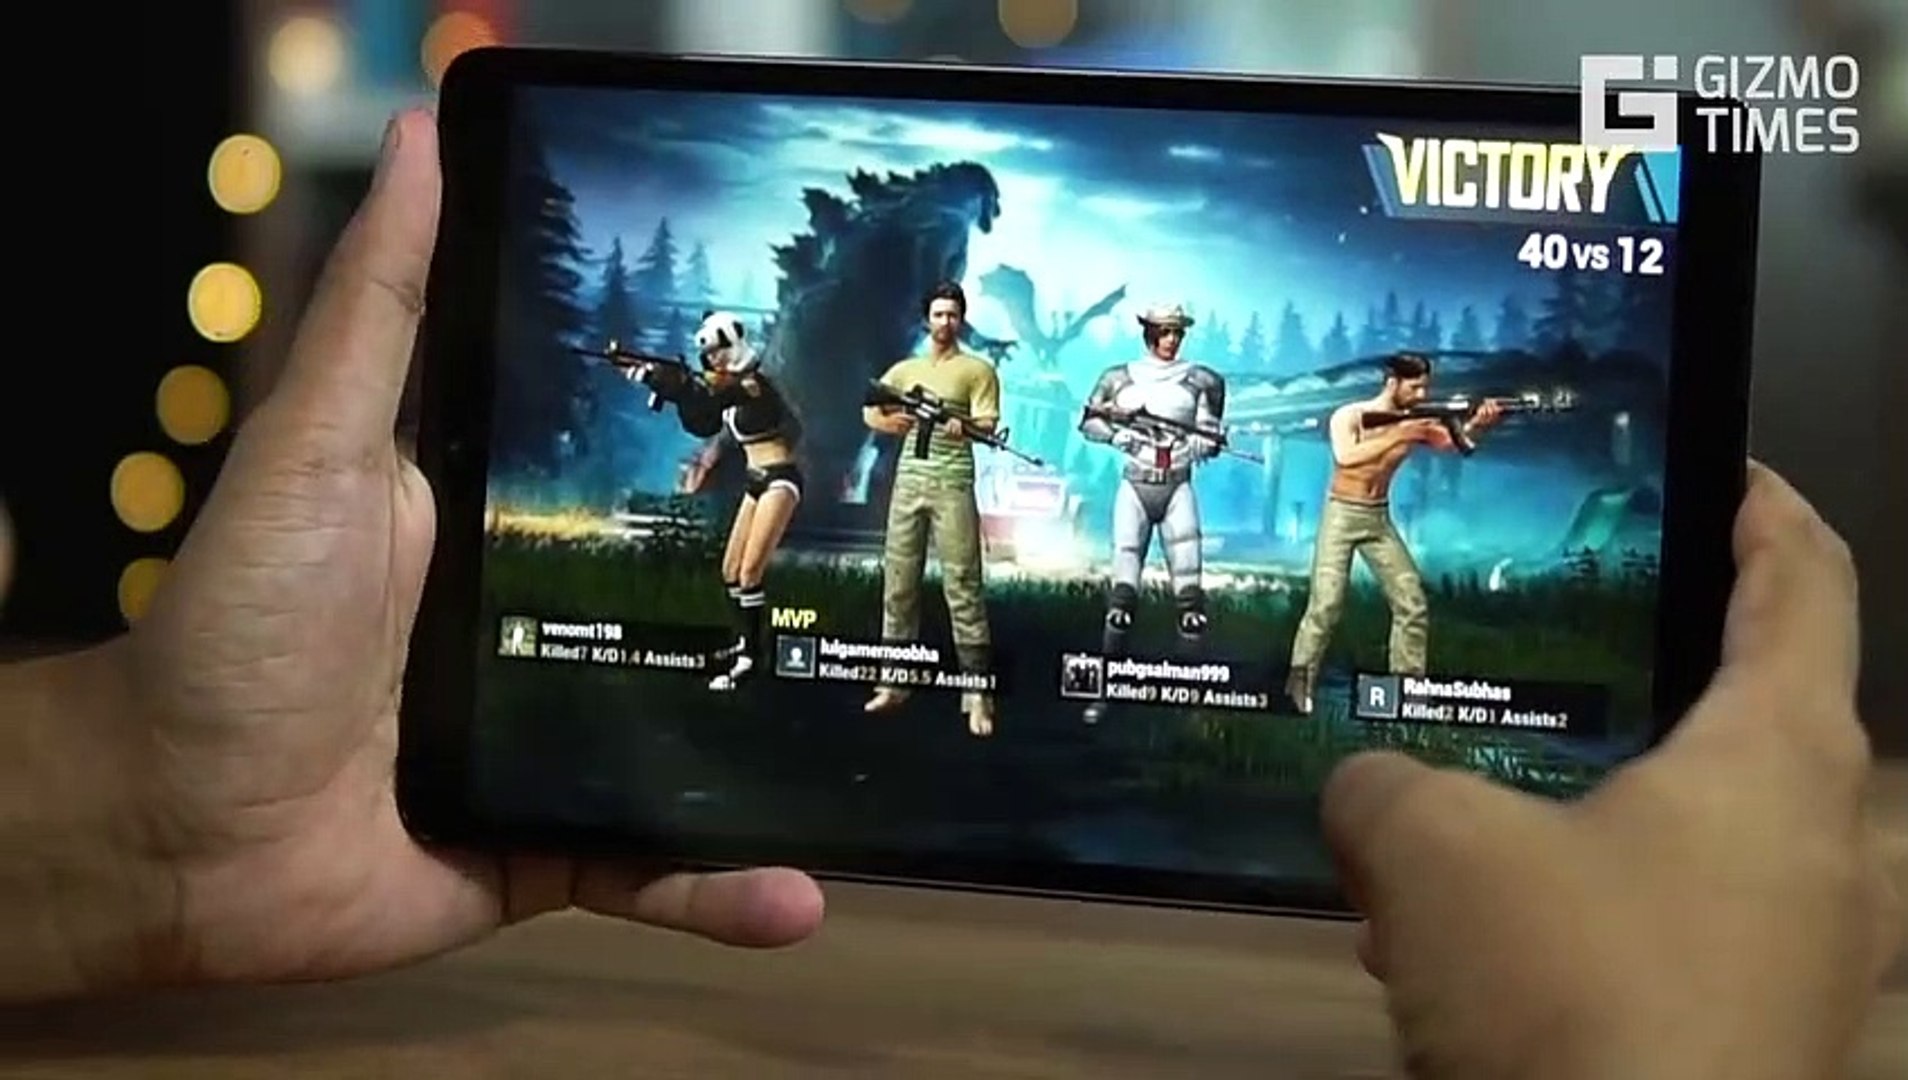 Samsung Galaxy Tab A 10.1 2019 Gaming Review, Pubg Mobile, Asphalt 9 Gaming  Performance Test - video Dailymotion